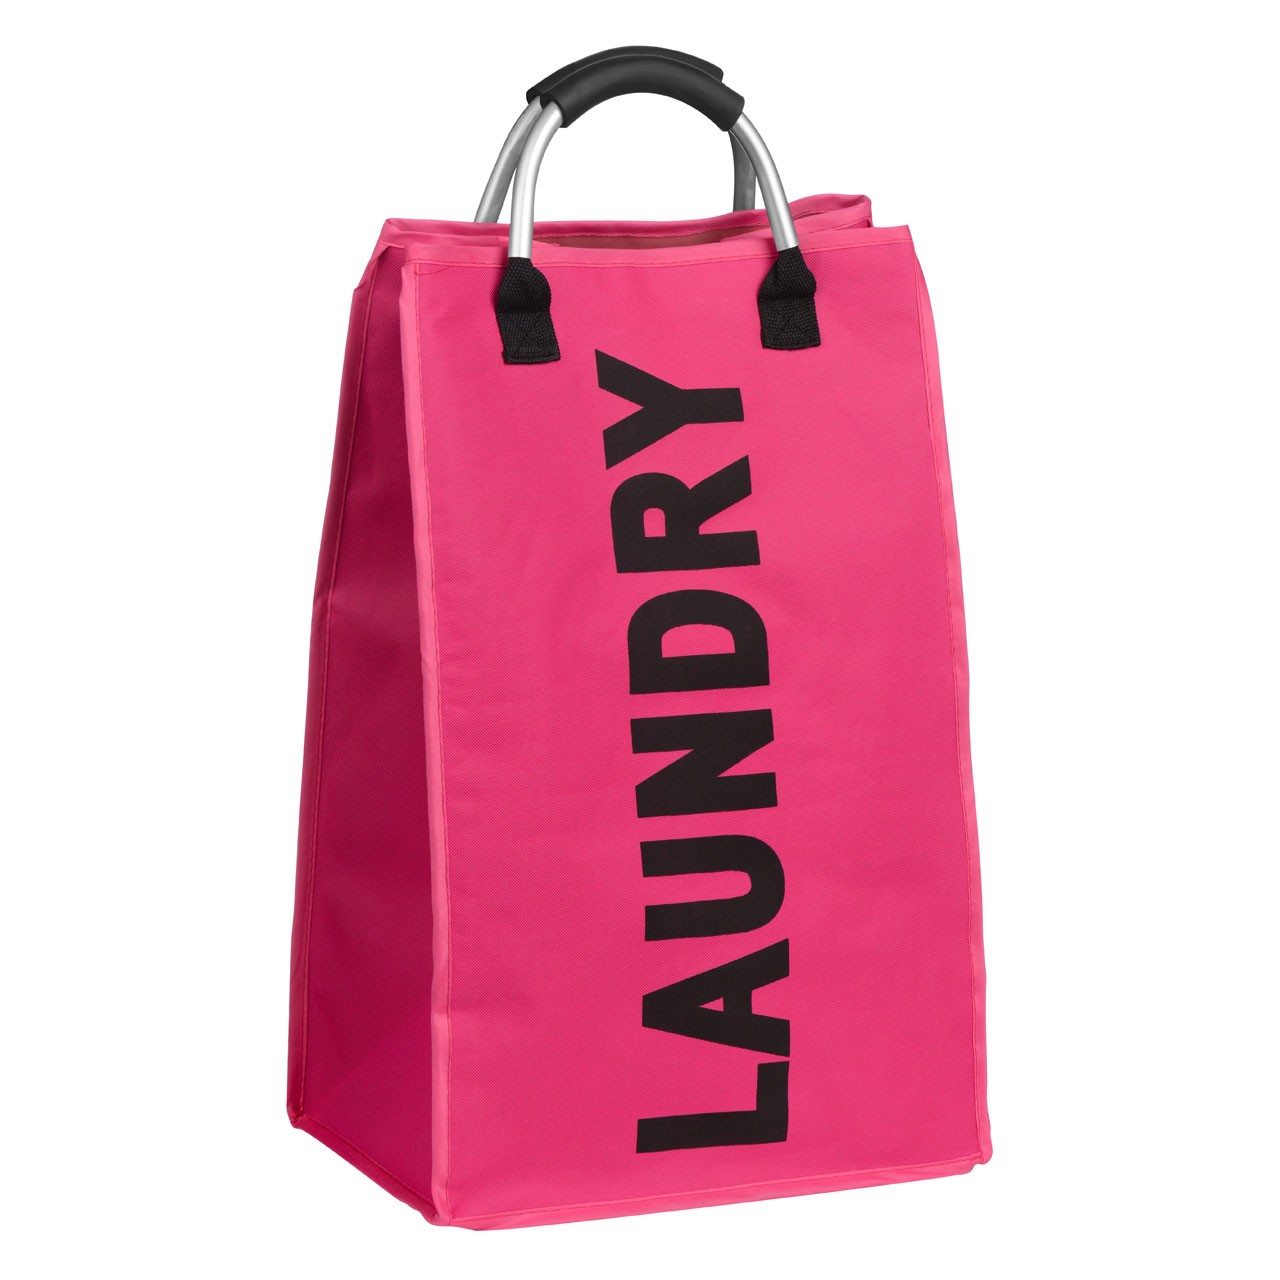 Prime Furnishing Laundry Bag with Aluminium Handle - Hot Pink